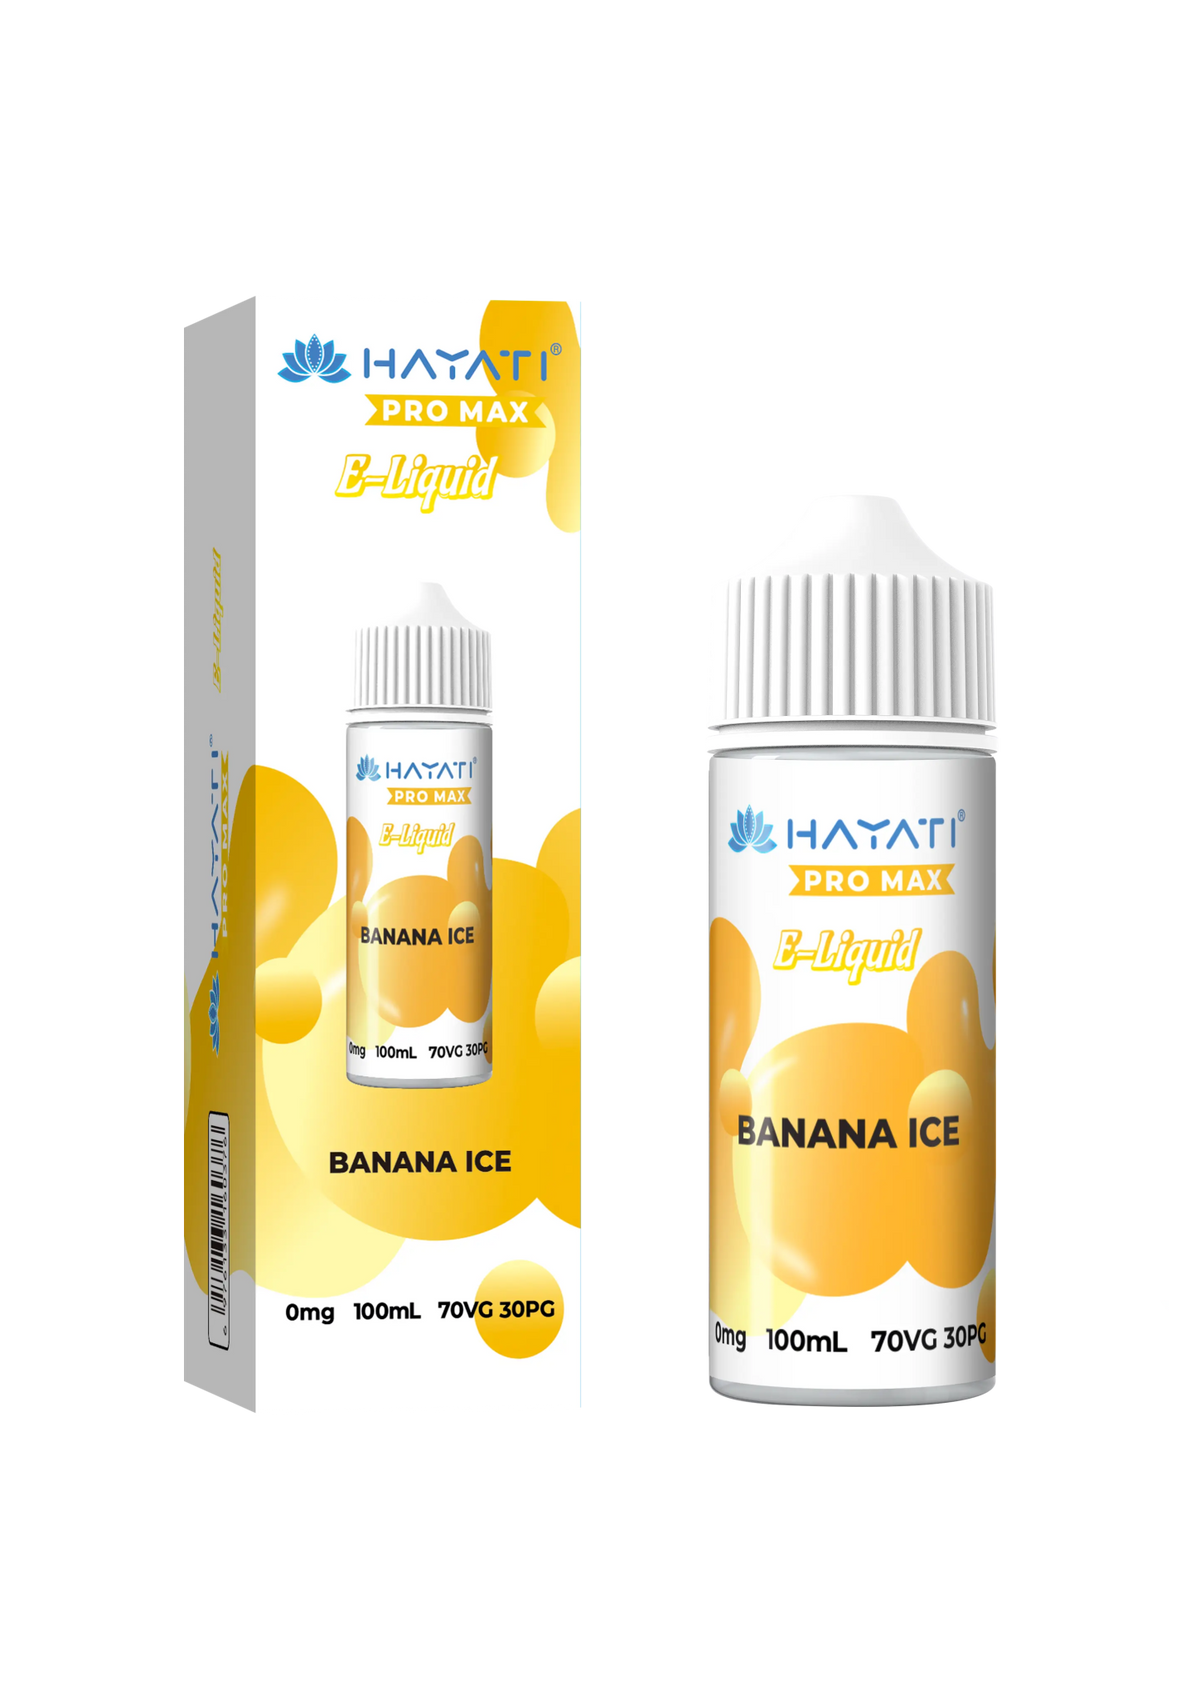 Hayati Pro Max E-liquid 100ml Vape Juice - Mcr Vape Distro